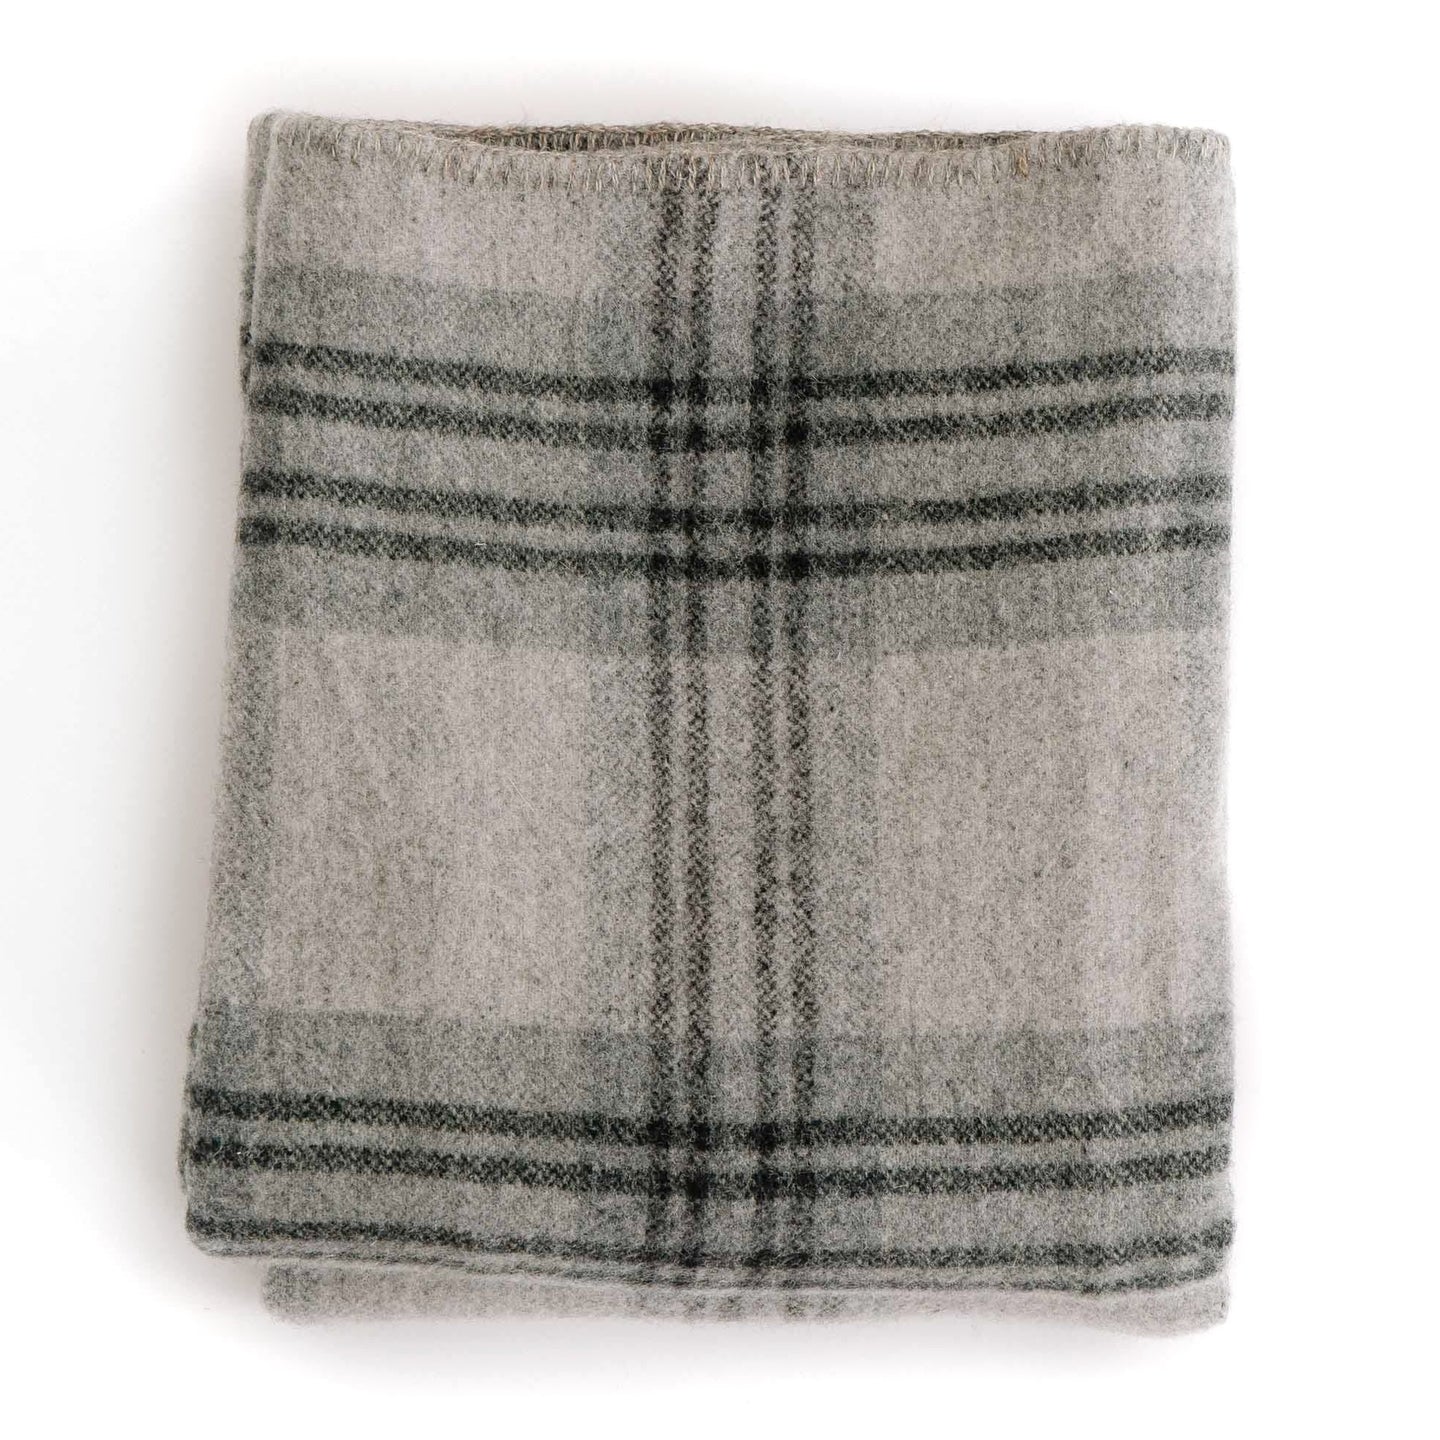 Mernio Wool Blanket | Plaid in Ledge/Fog